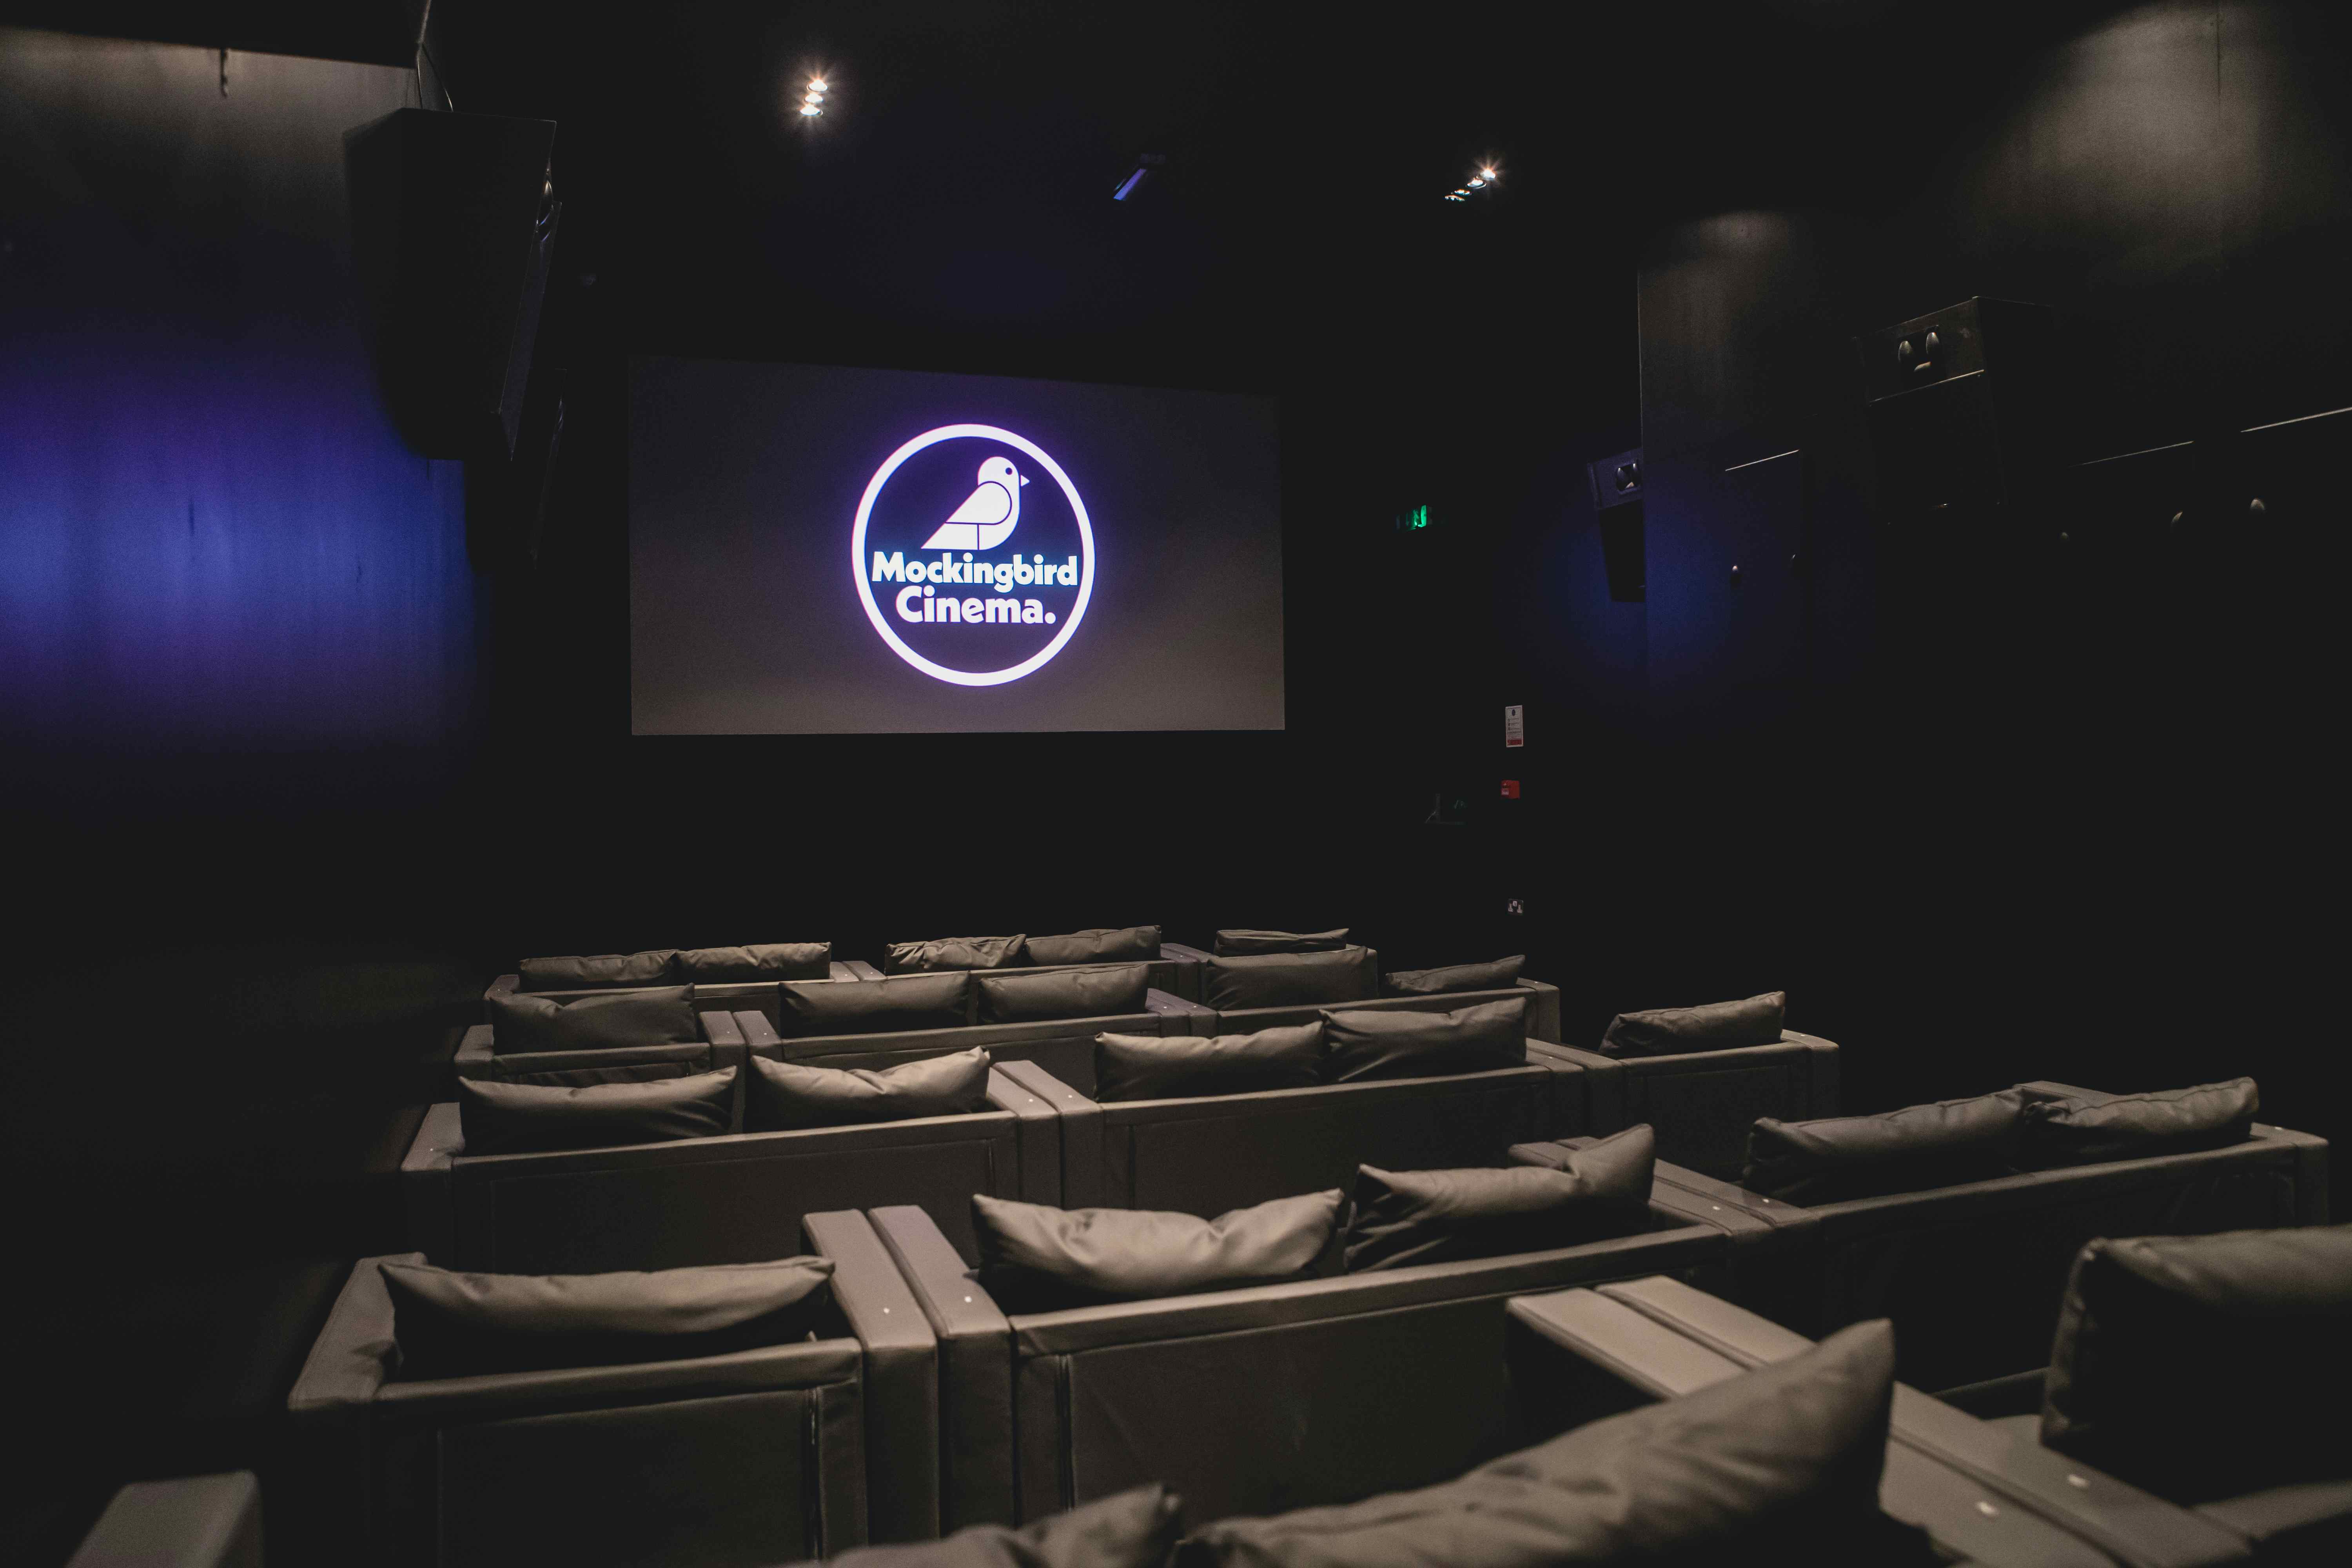 Screen 2, The Mockingbird Cinema